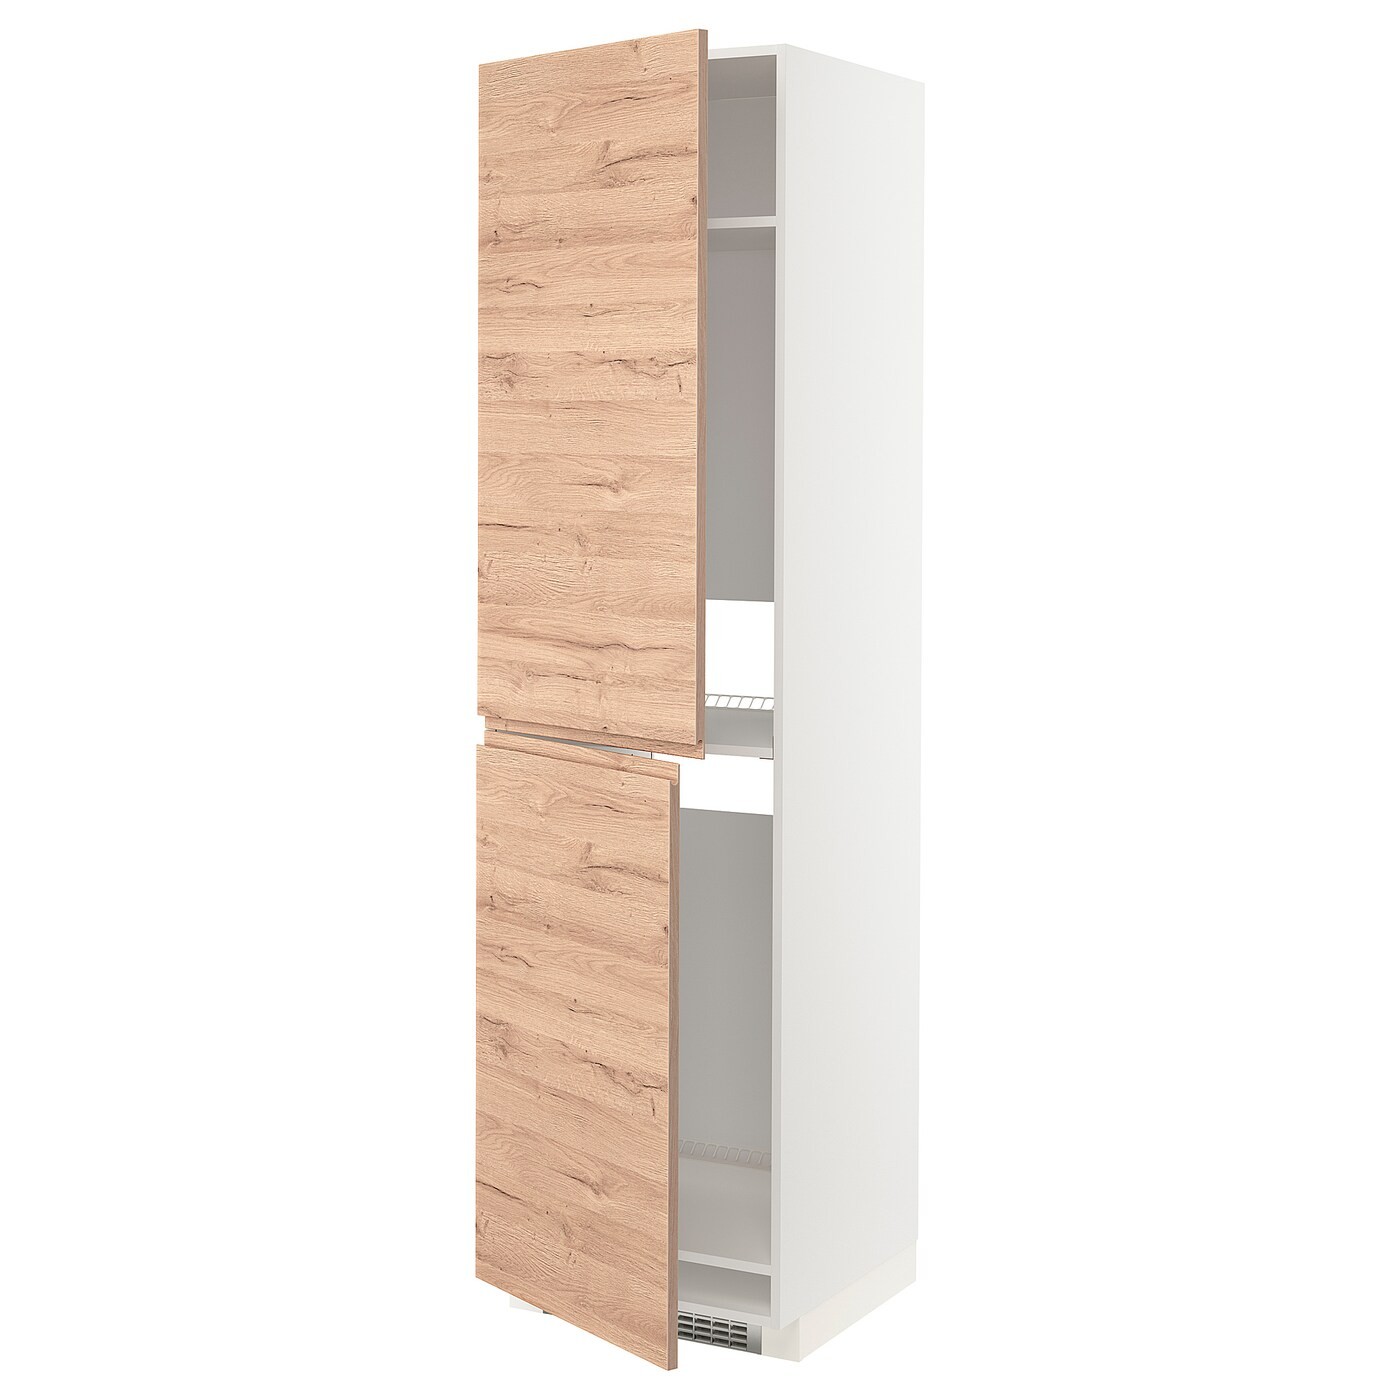 IKEA METOD МЕТОД Высокий шкаф для холодильника / морозильника, белый / Voxtorp имитация дуб, 60x60x220 см 19402380 194.023.80